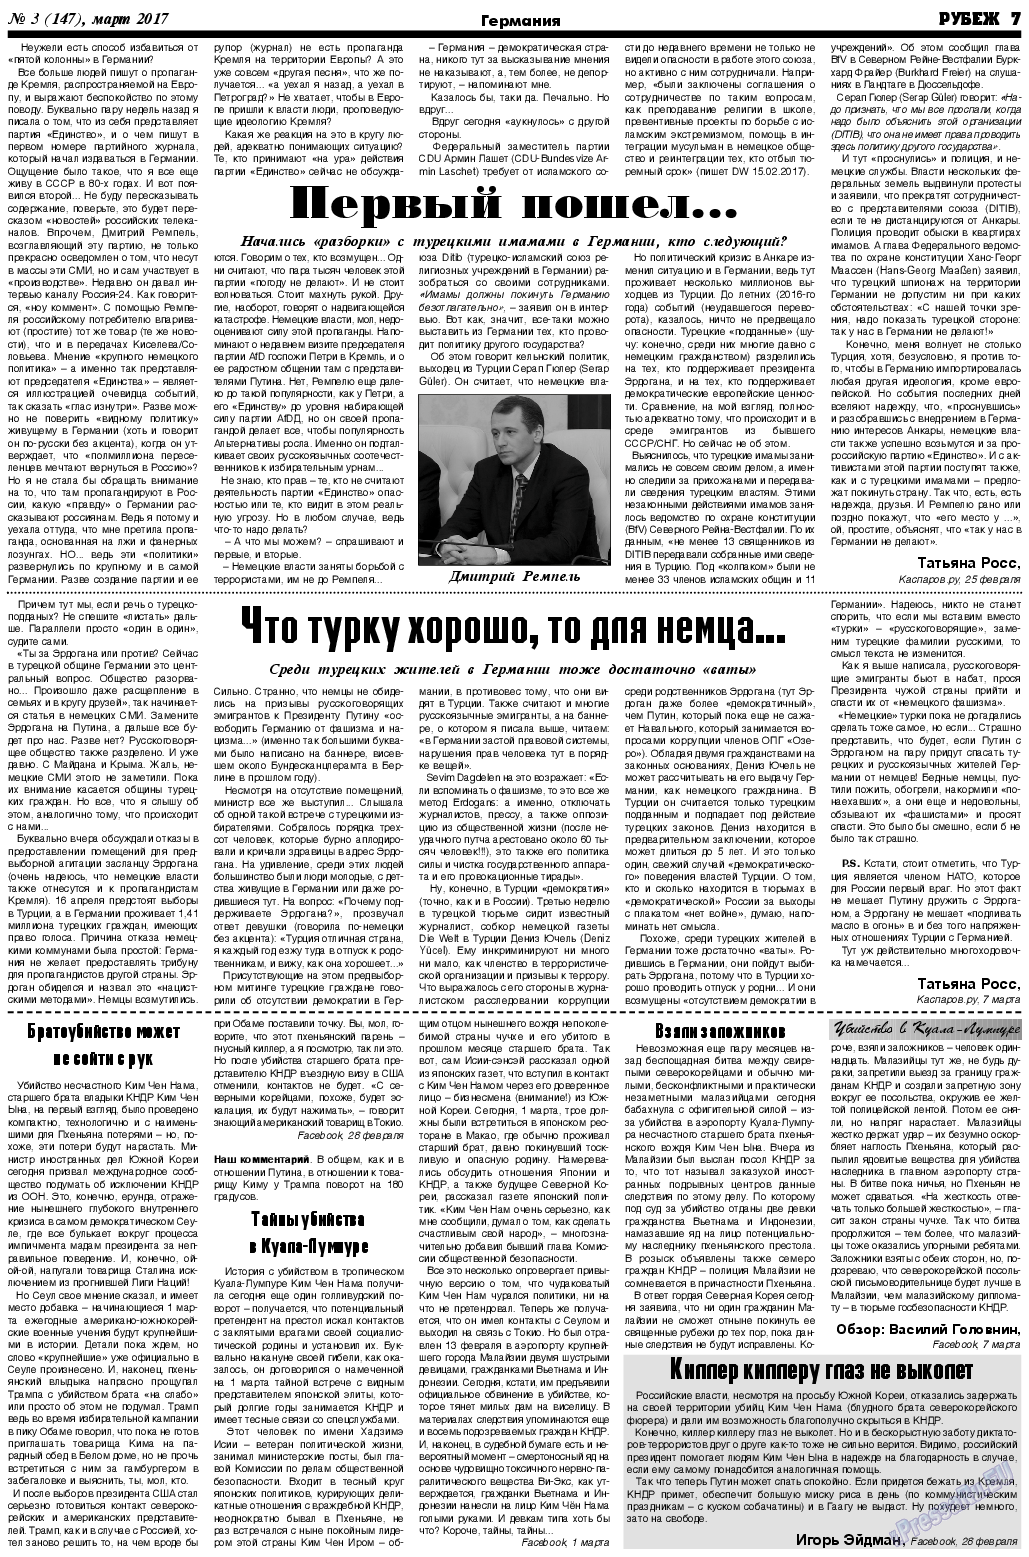 Рубеж, газета. 2017 №3 стр.7